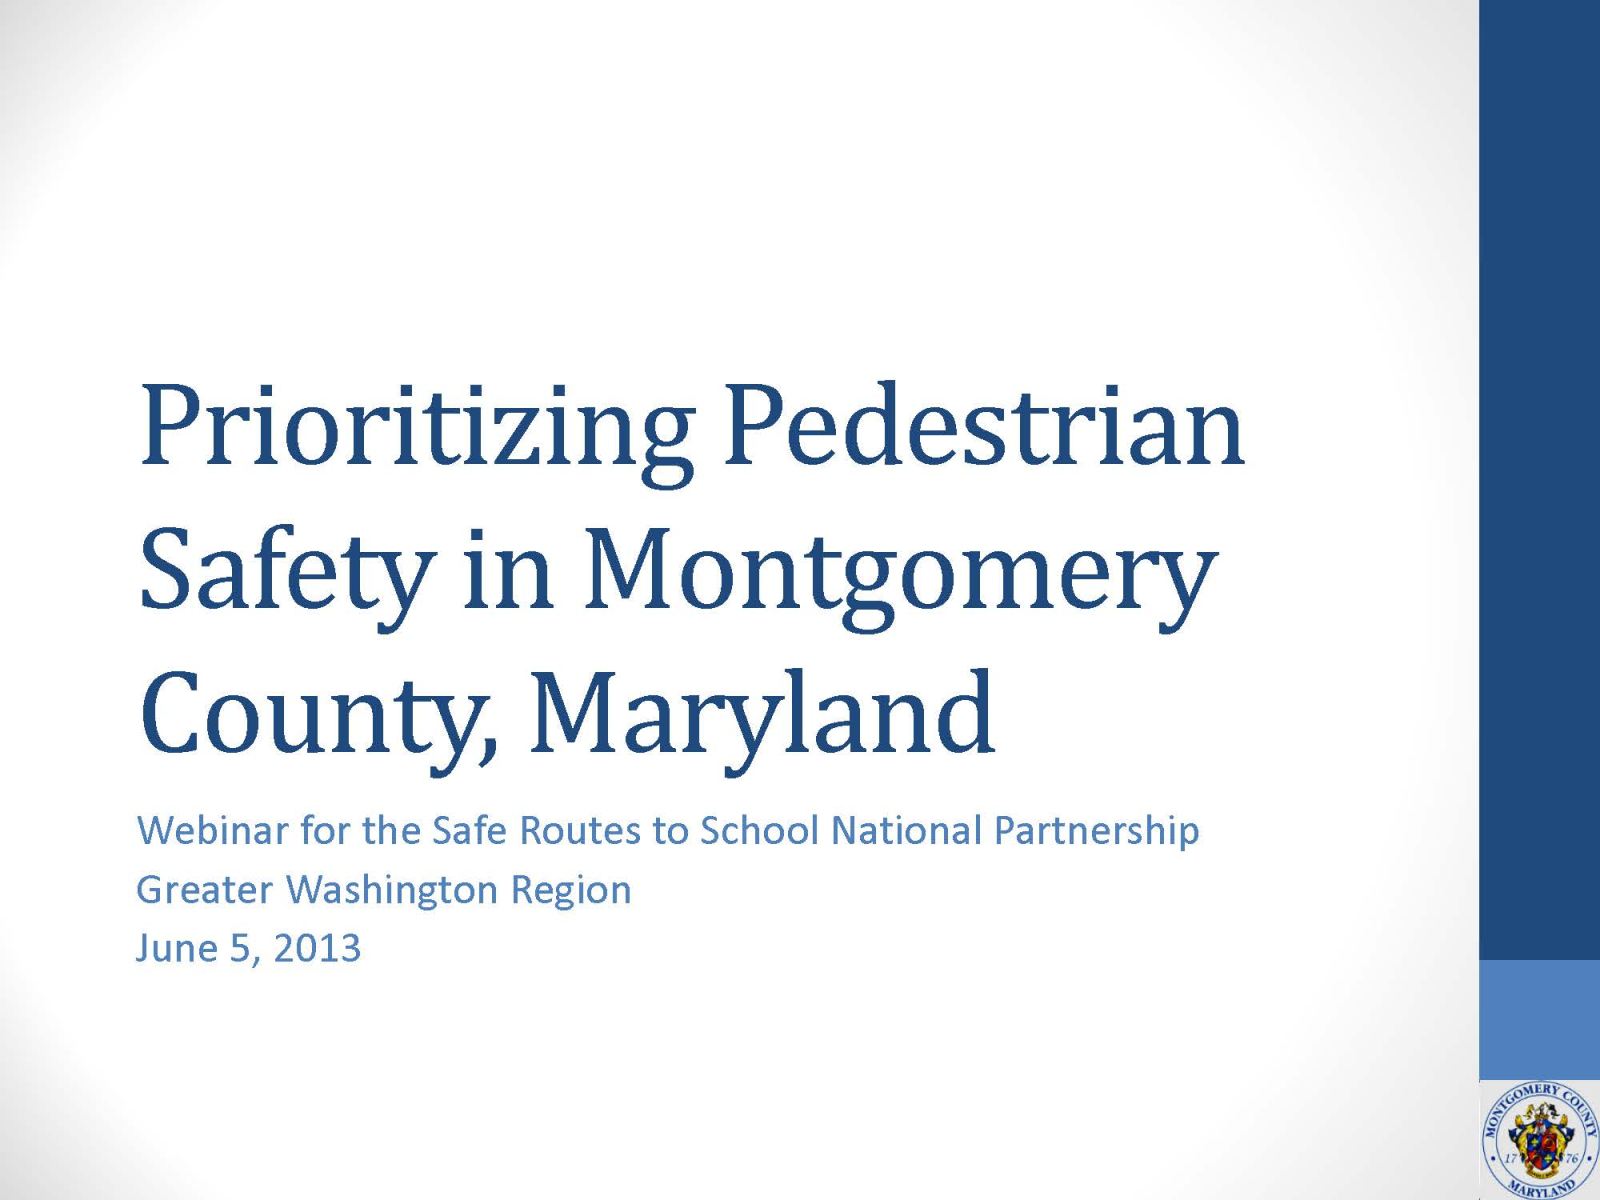 Montgomery County Pedestrian Safety Webinar